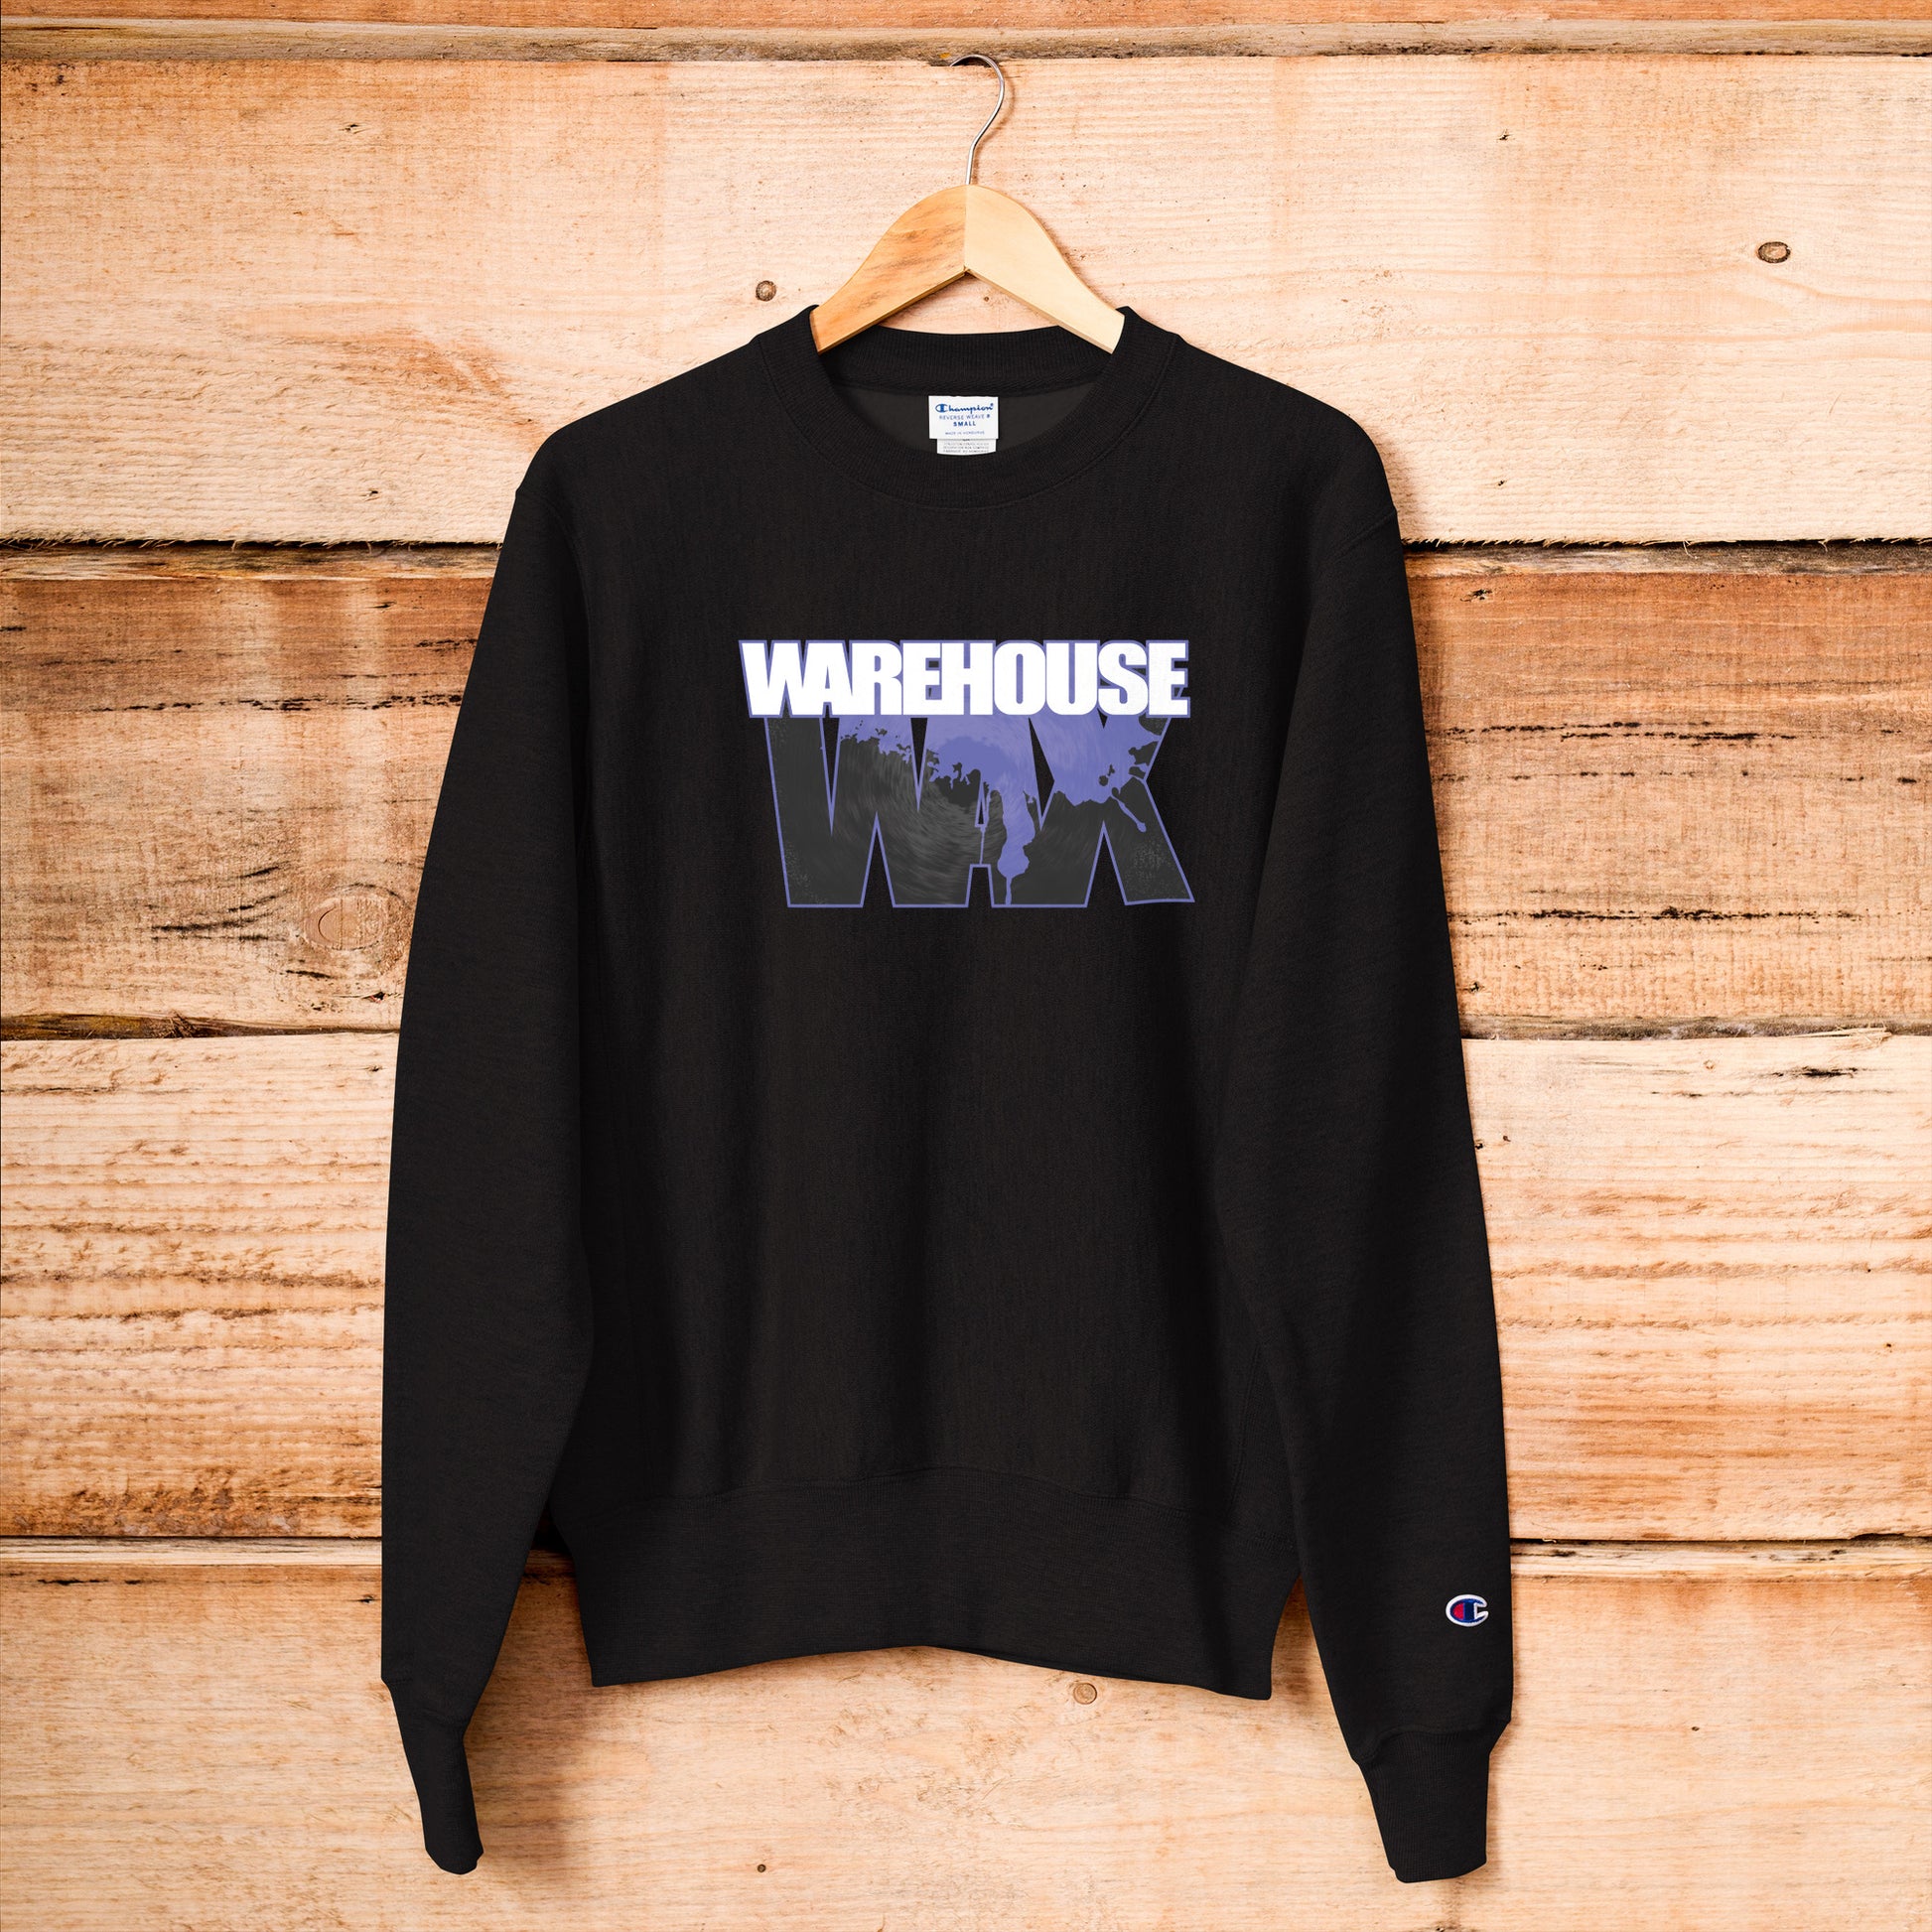 Warehouse Wax Sweatshirt - Vinyl Junkie UK 